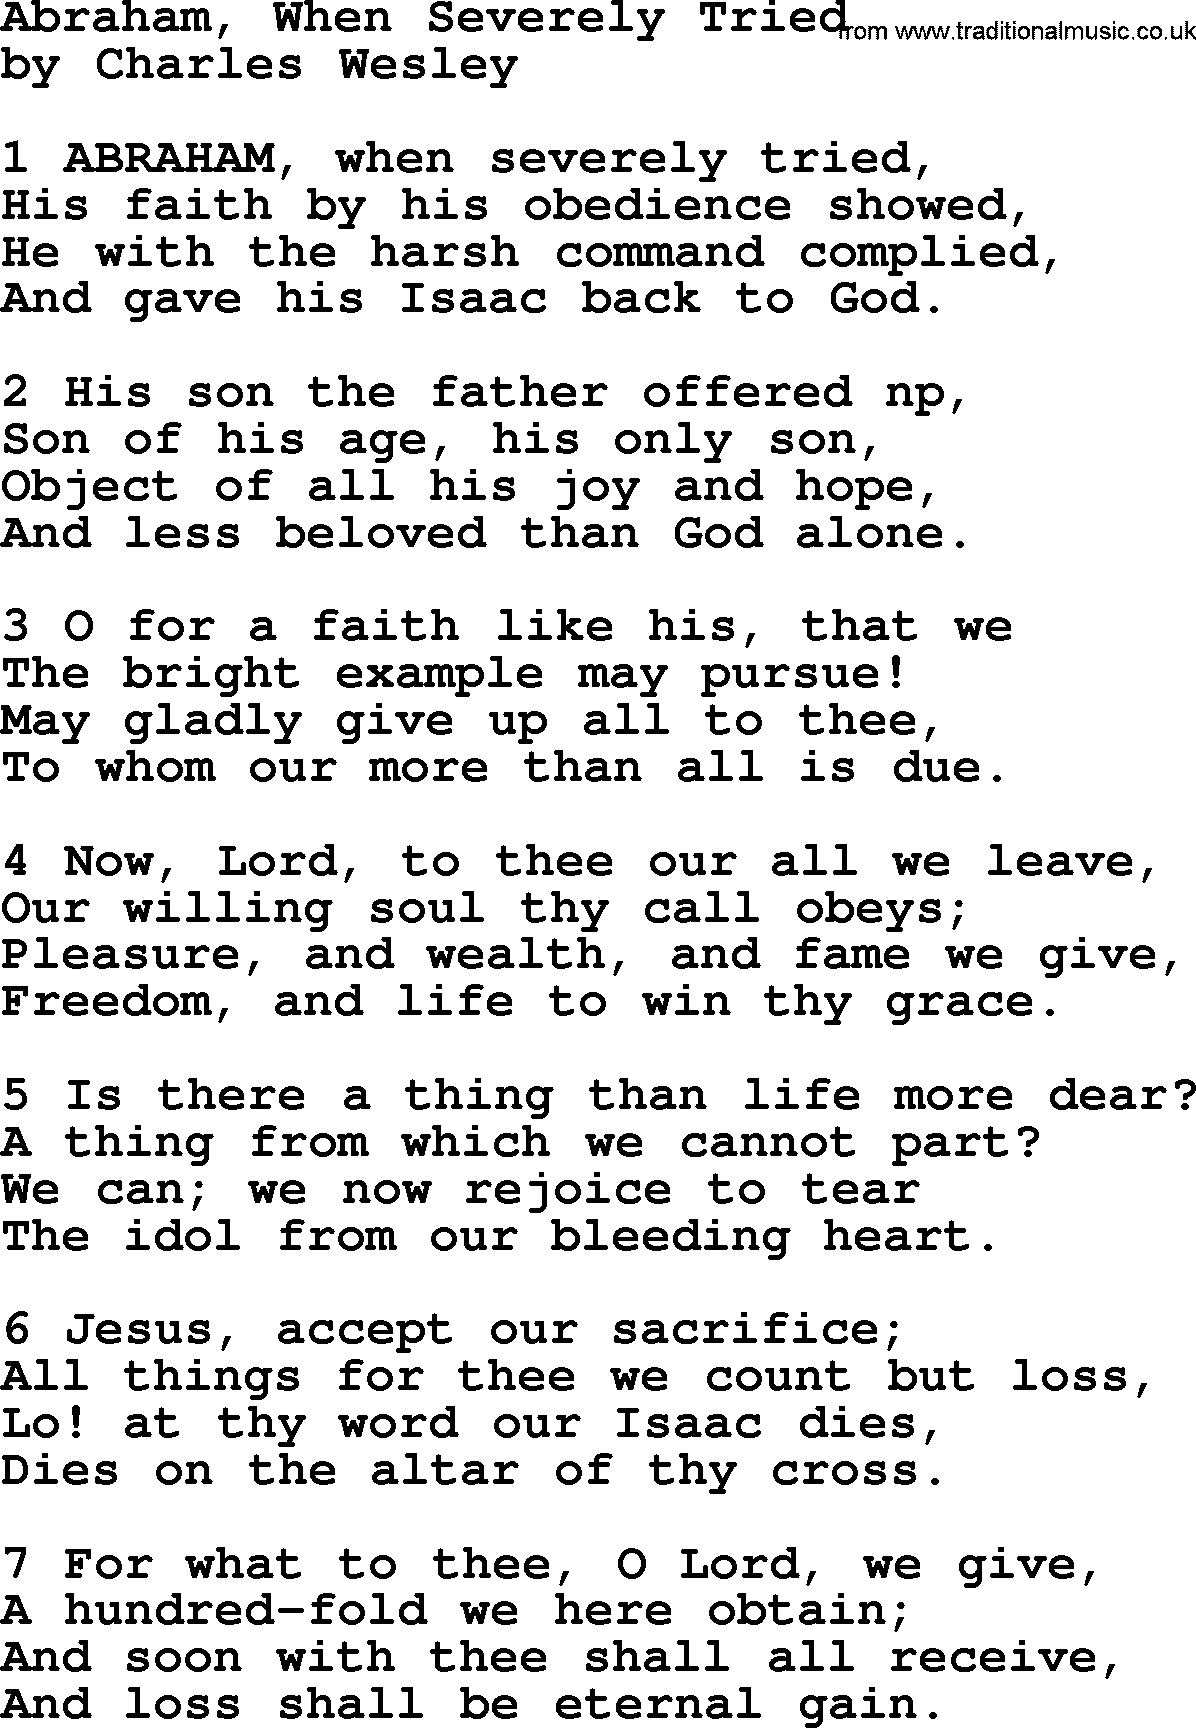 Charles Wesley hymn: Abraham, When Severely Tried, lyrics